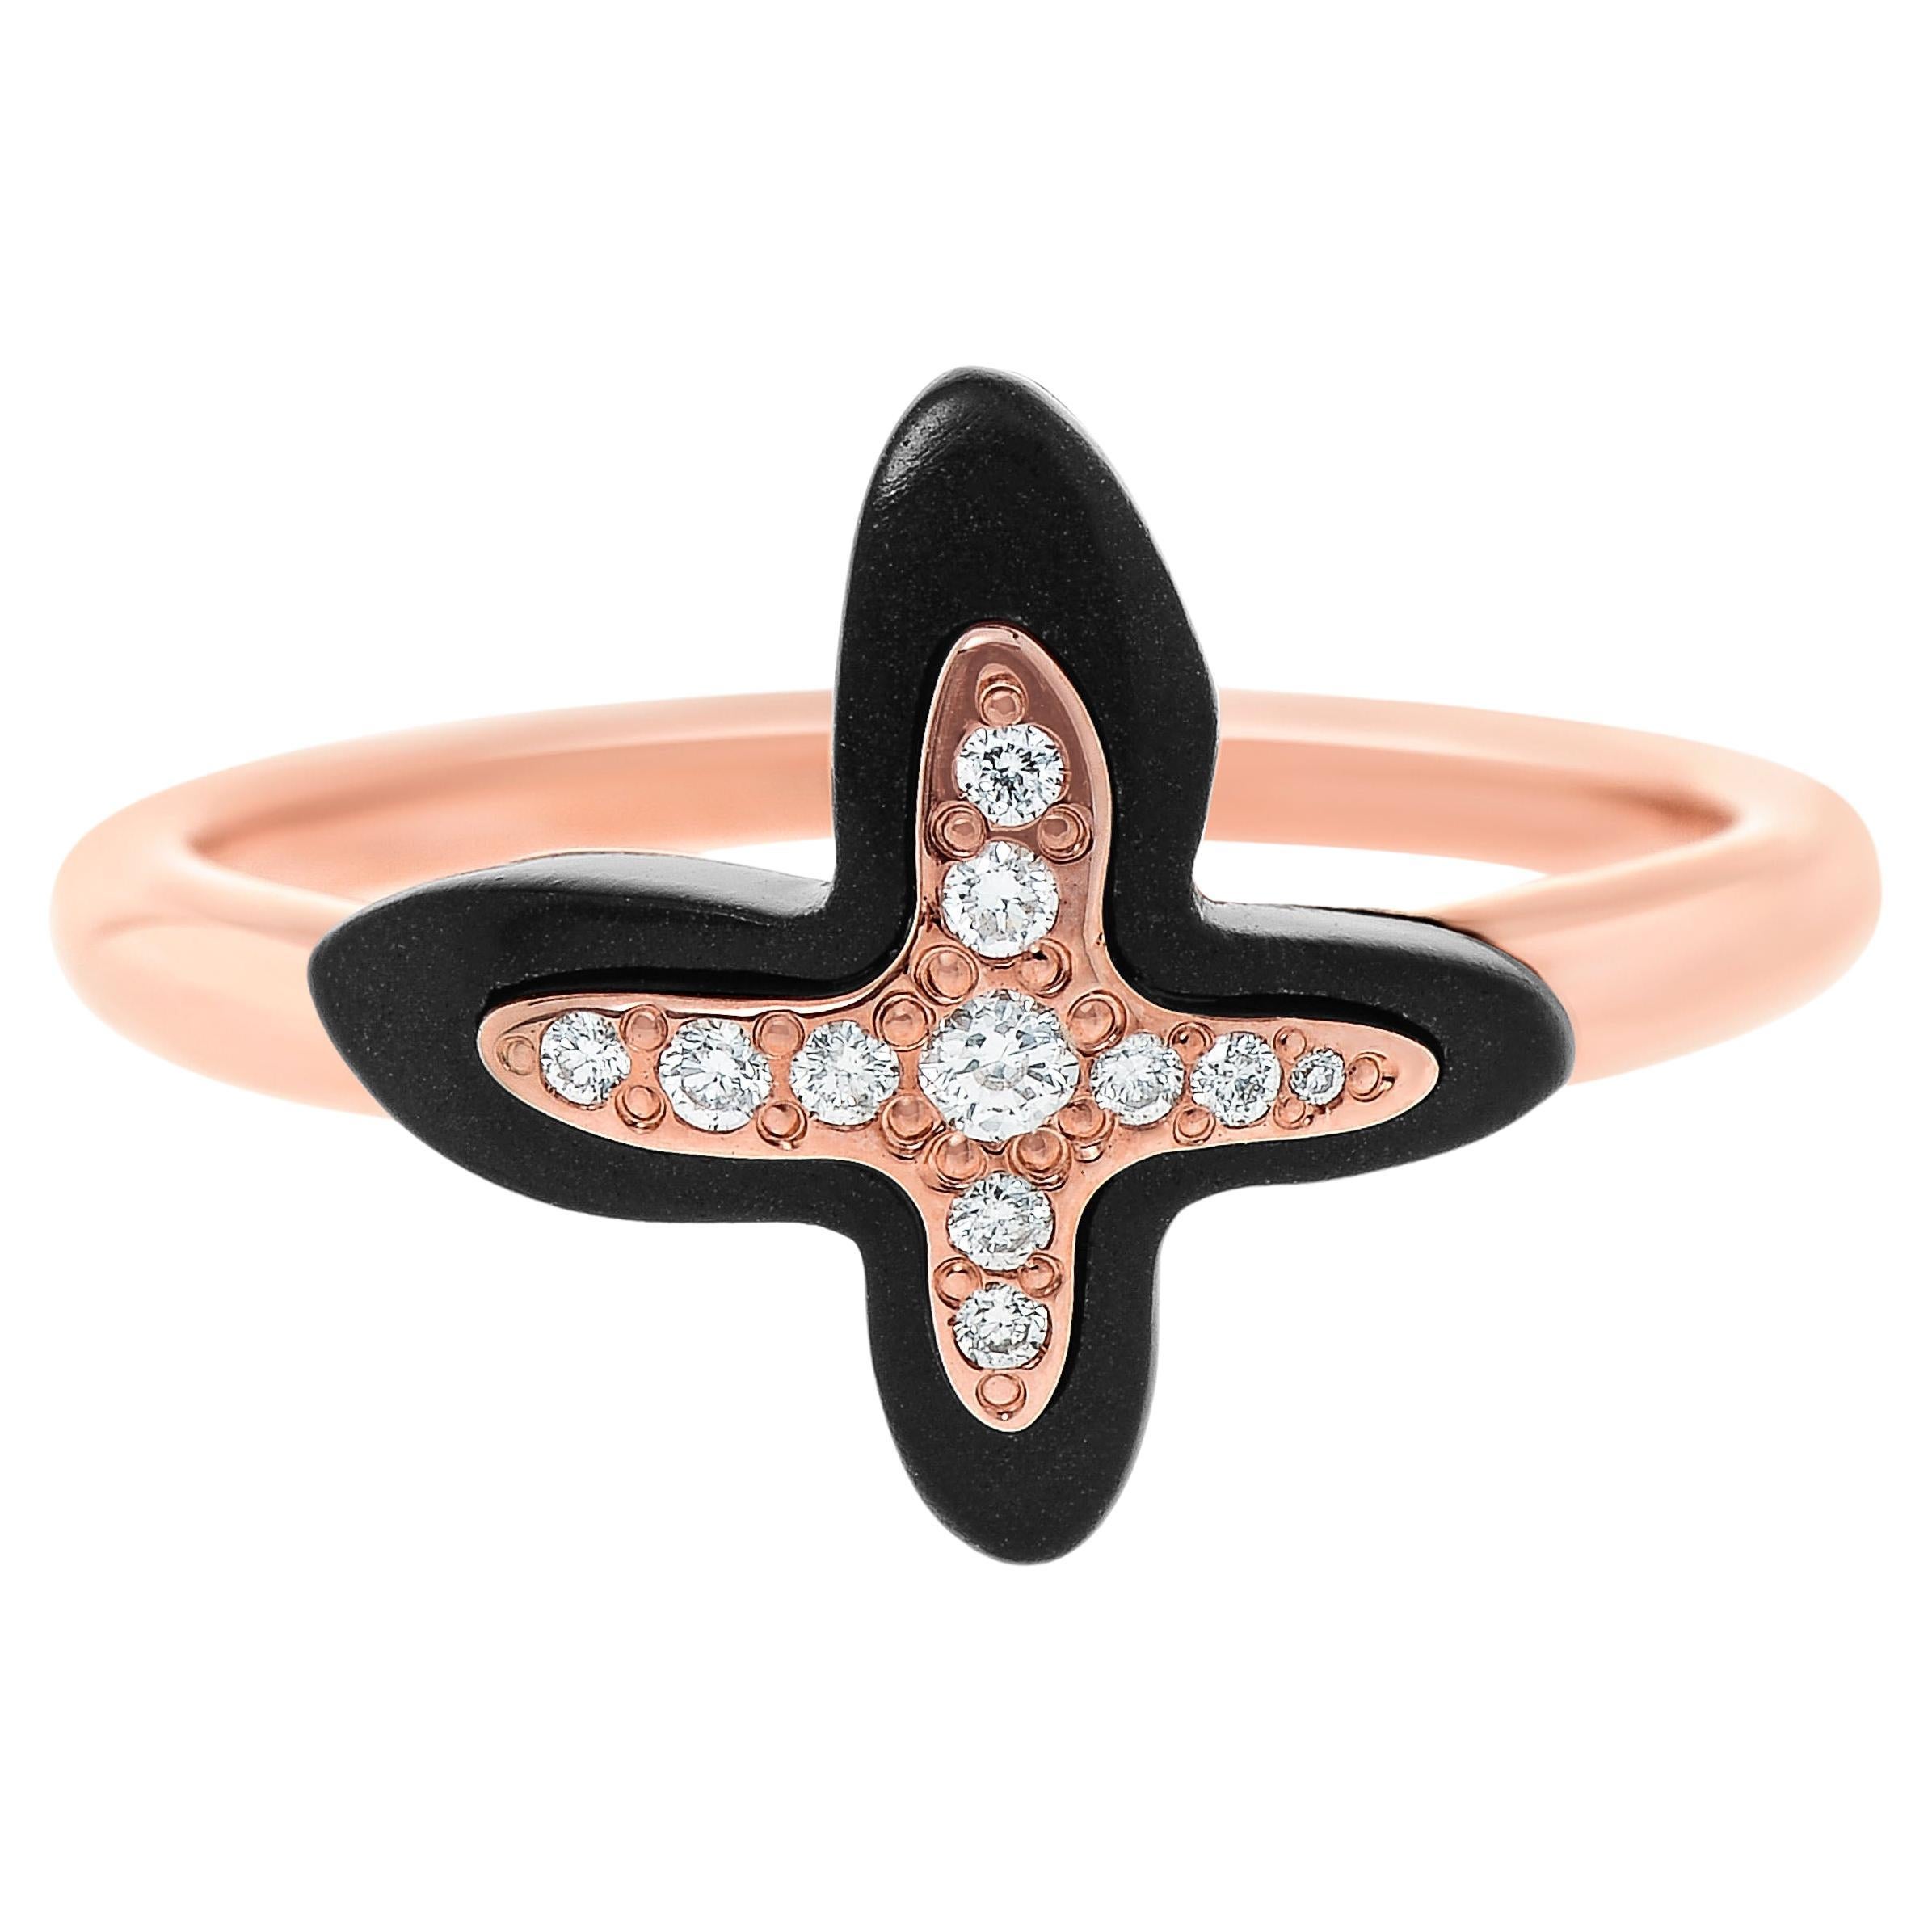 Mimi Milano Freevola 18K Rose Gold, Diamond and Onyx Ring sz 7.25 For Sale